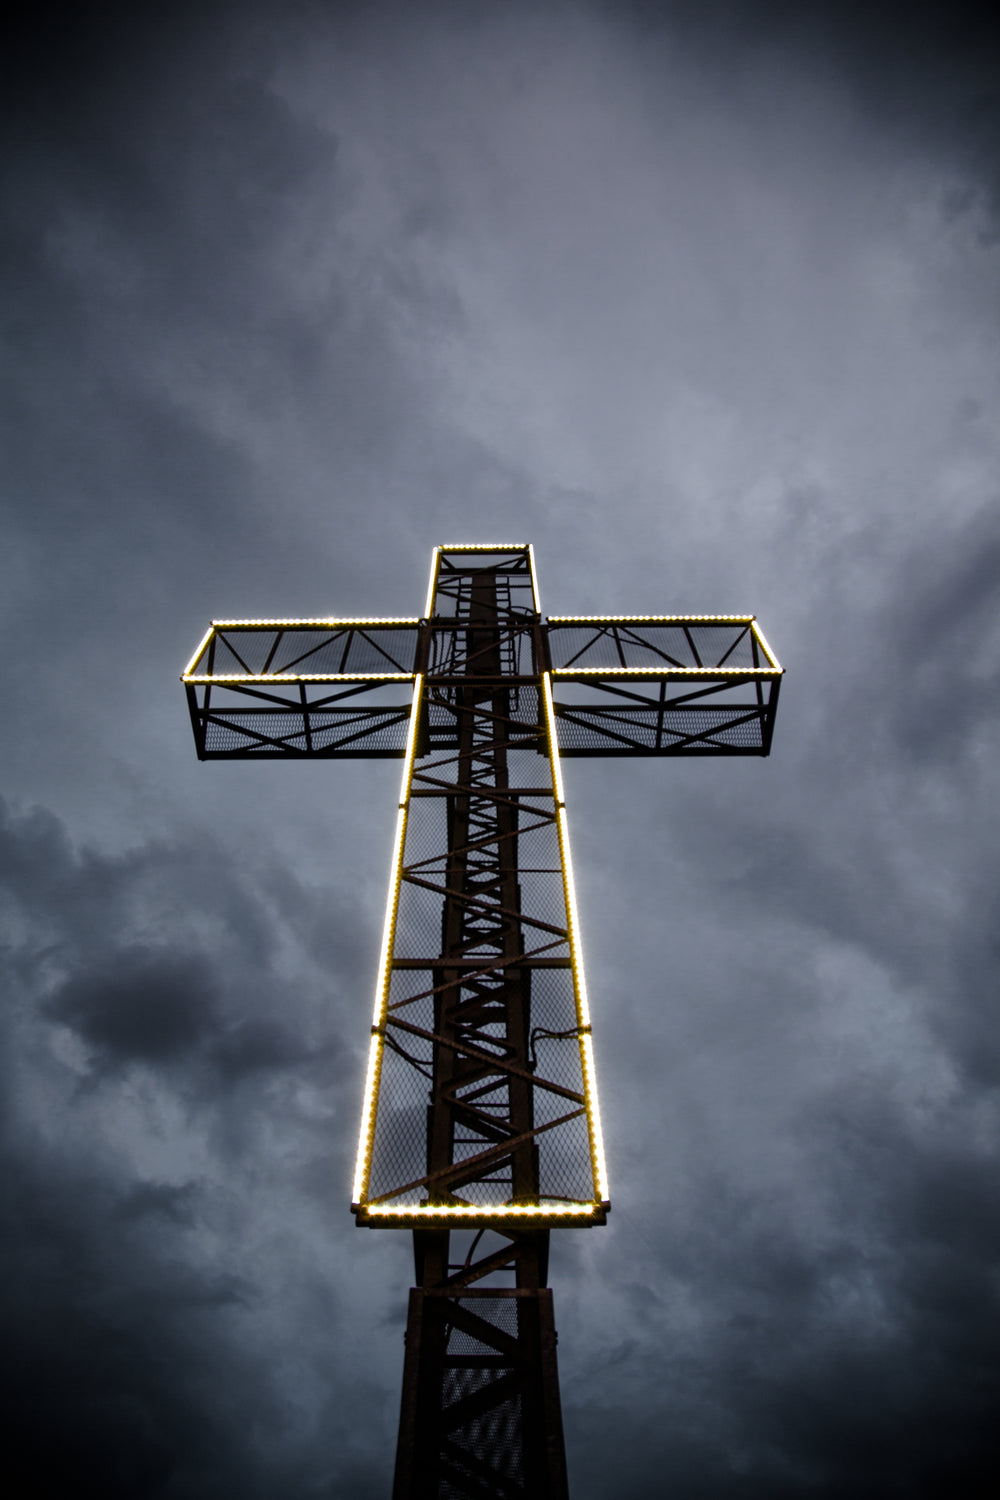 led lit cross against stormy sky